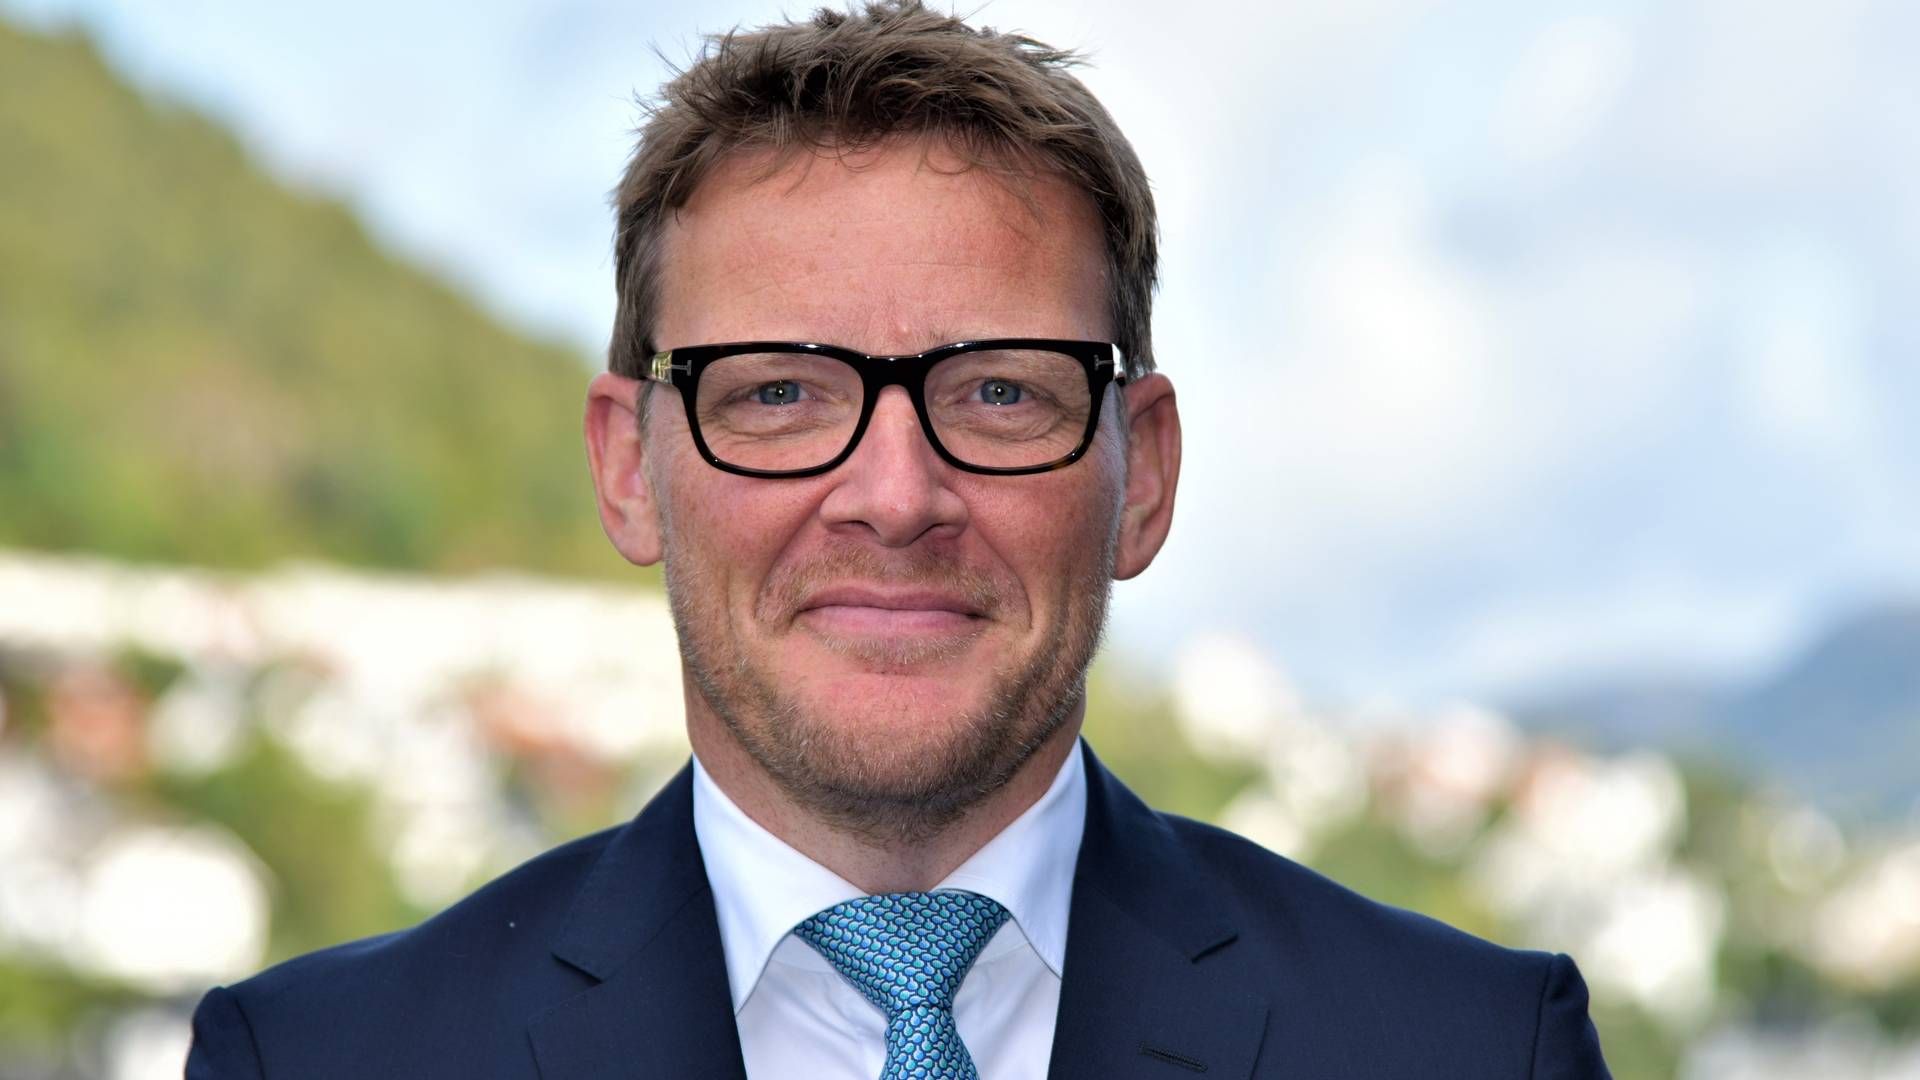 Kristian Mørch, CEO of investment firm J. Lauritzen. | Photo: Gunnar Eide/odfjell